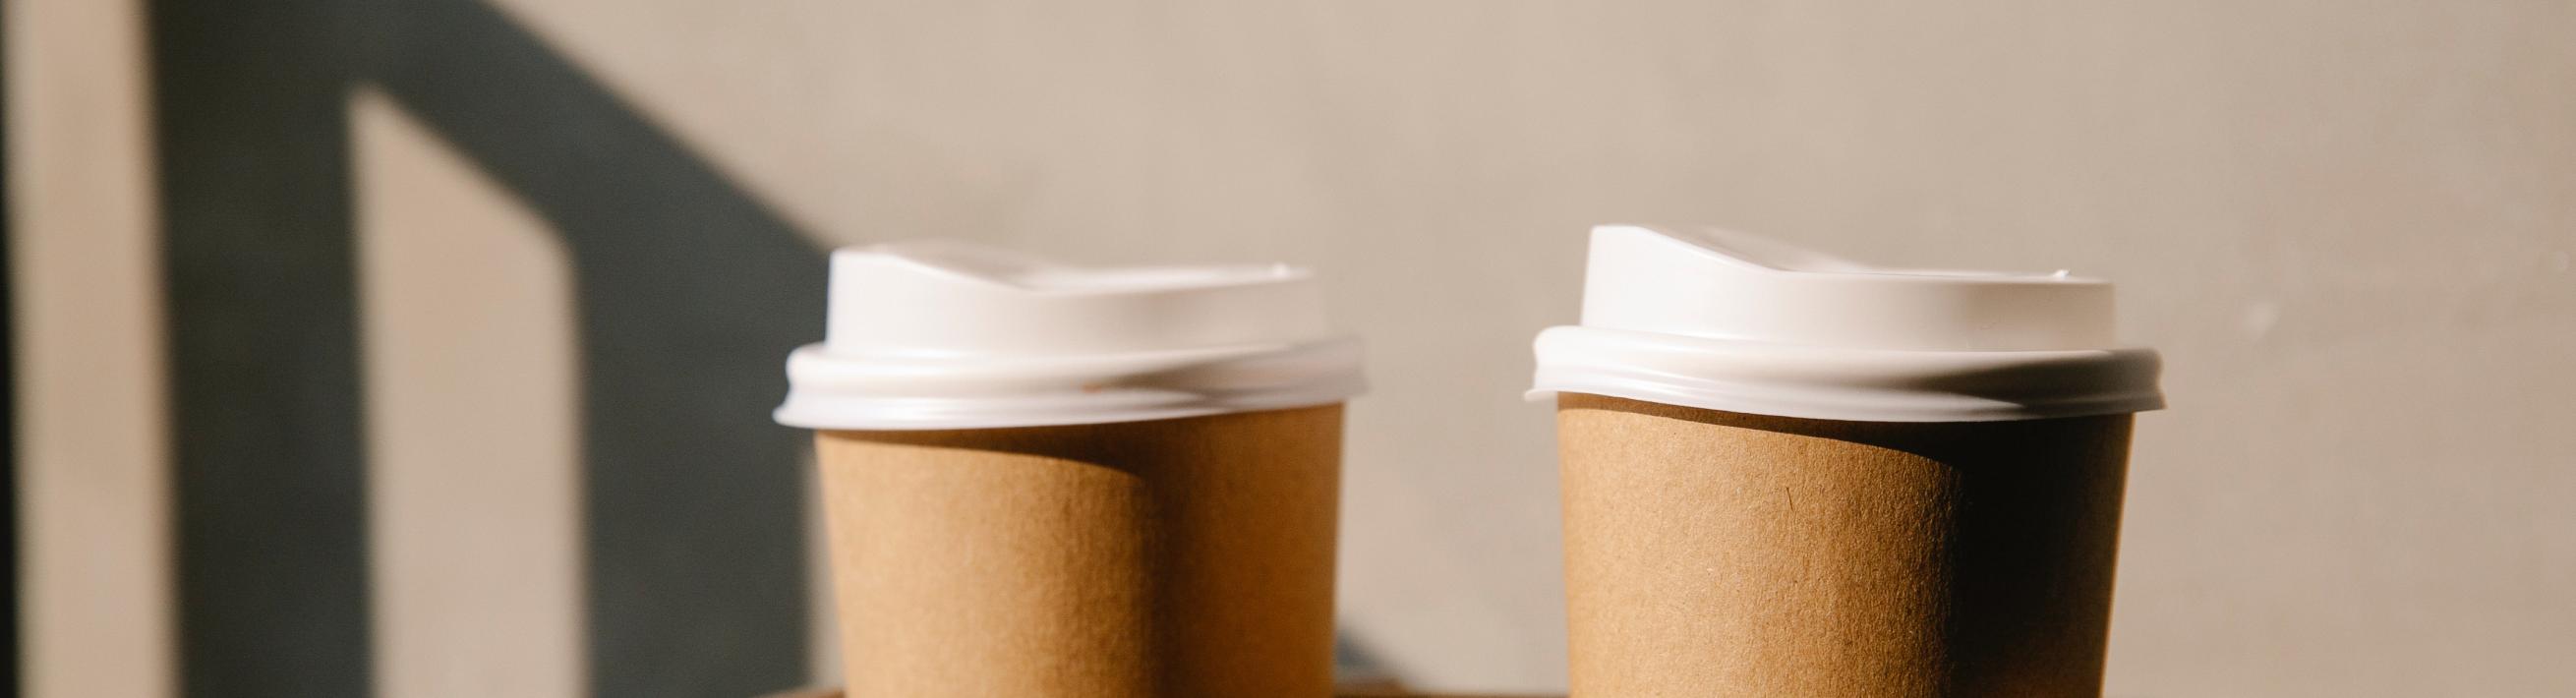 Two single-use coffee cups